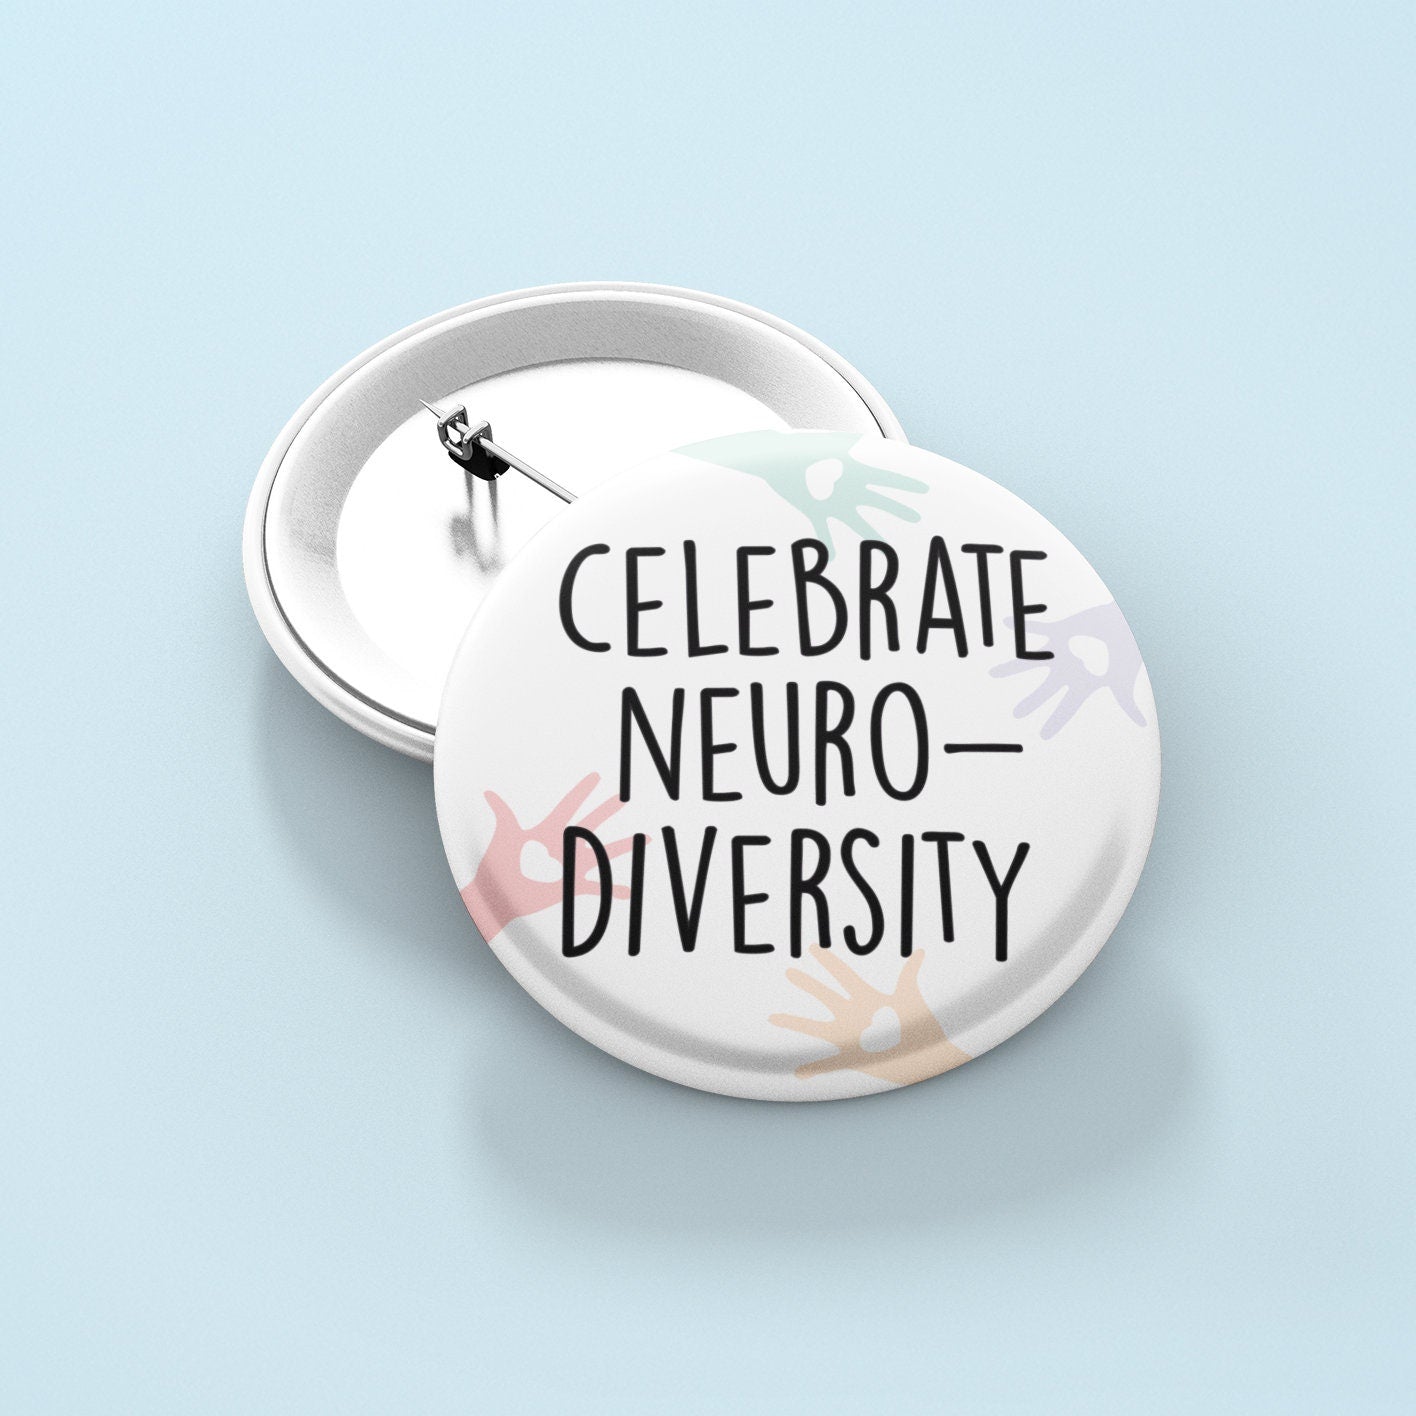 Celebrate Neurodiversity Badge Pin  (3 choices) | Autism Acceptance - Neurodiversity Badge, Autism Spectrum - ADHD